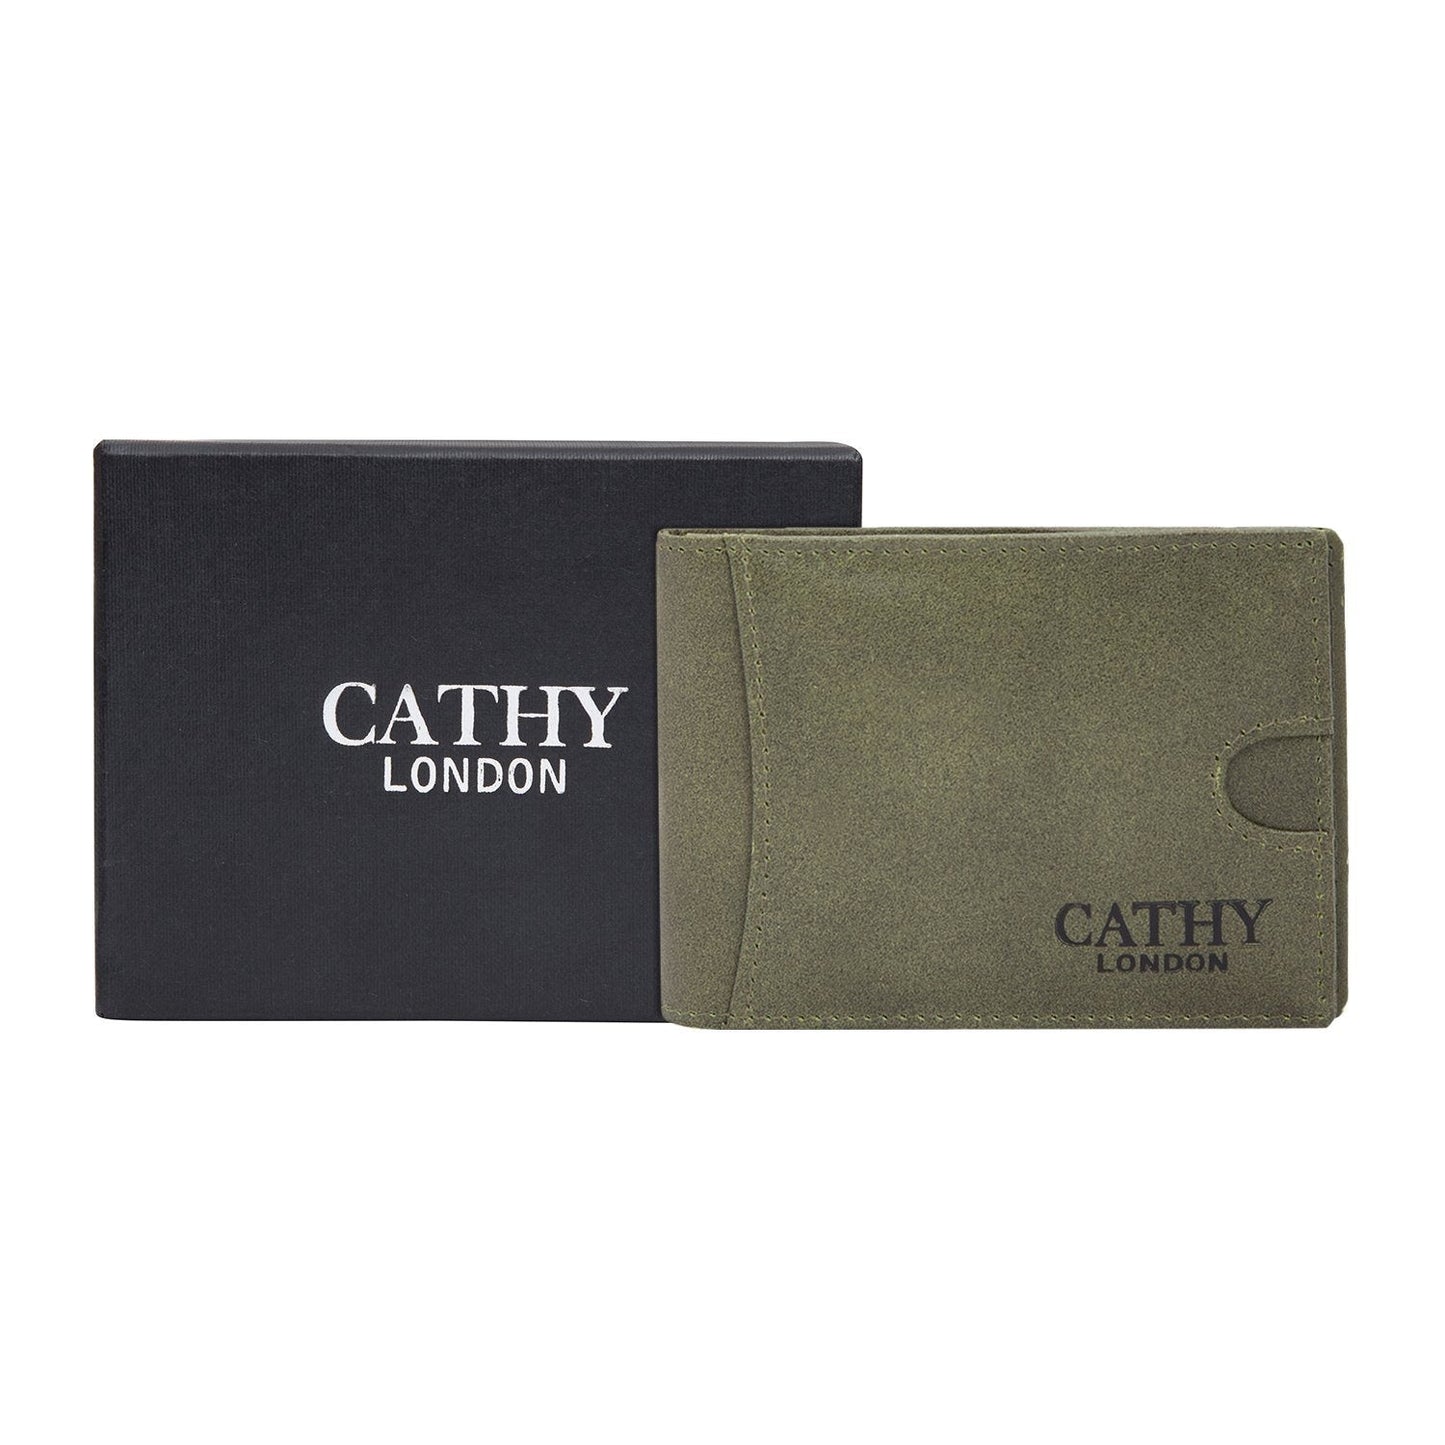 Olive Colour Italian Leather Money Clip/Slim Wallet (7 Card Slot + Money Clip) Cathy London 